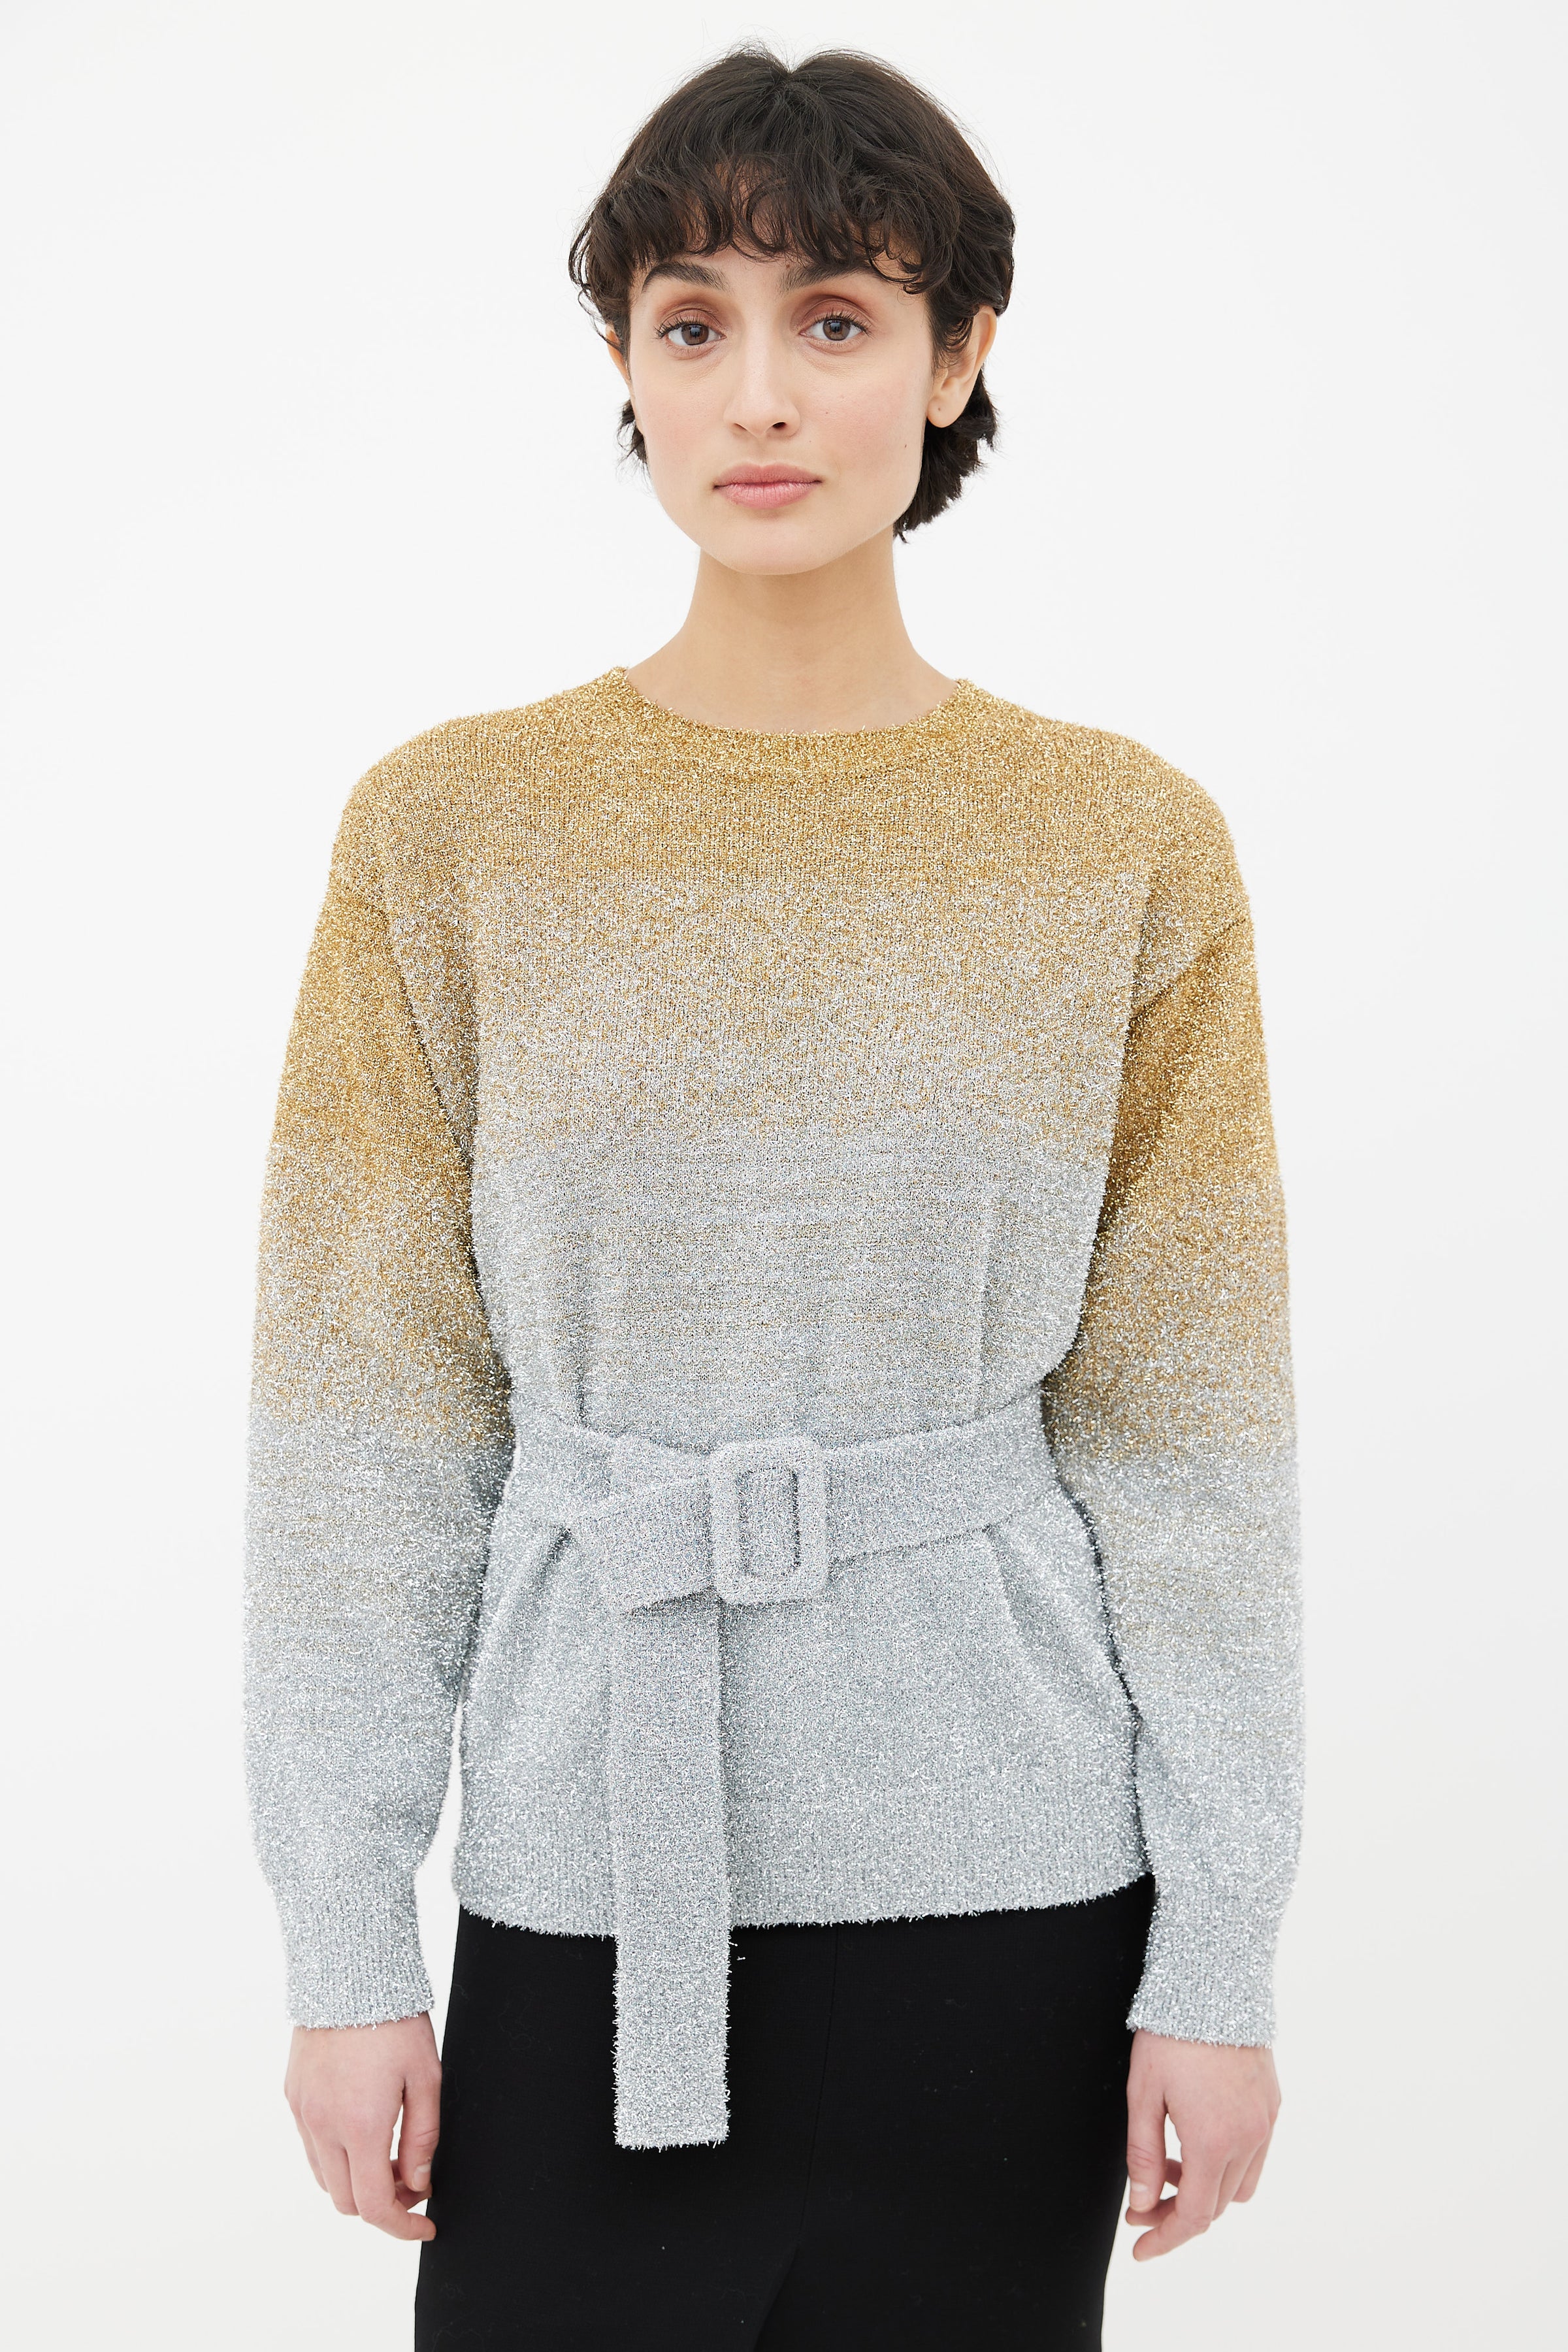 Dries Van Noten // Gold & Silver Metallic Ombré Belted Sweater 